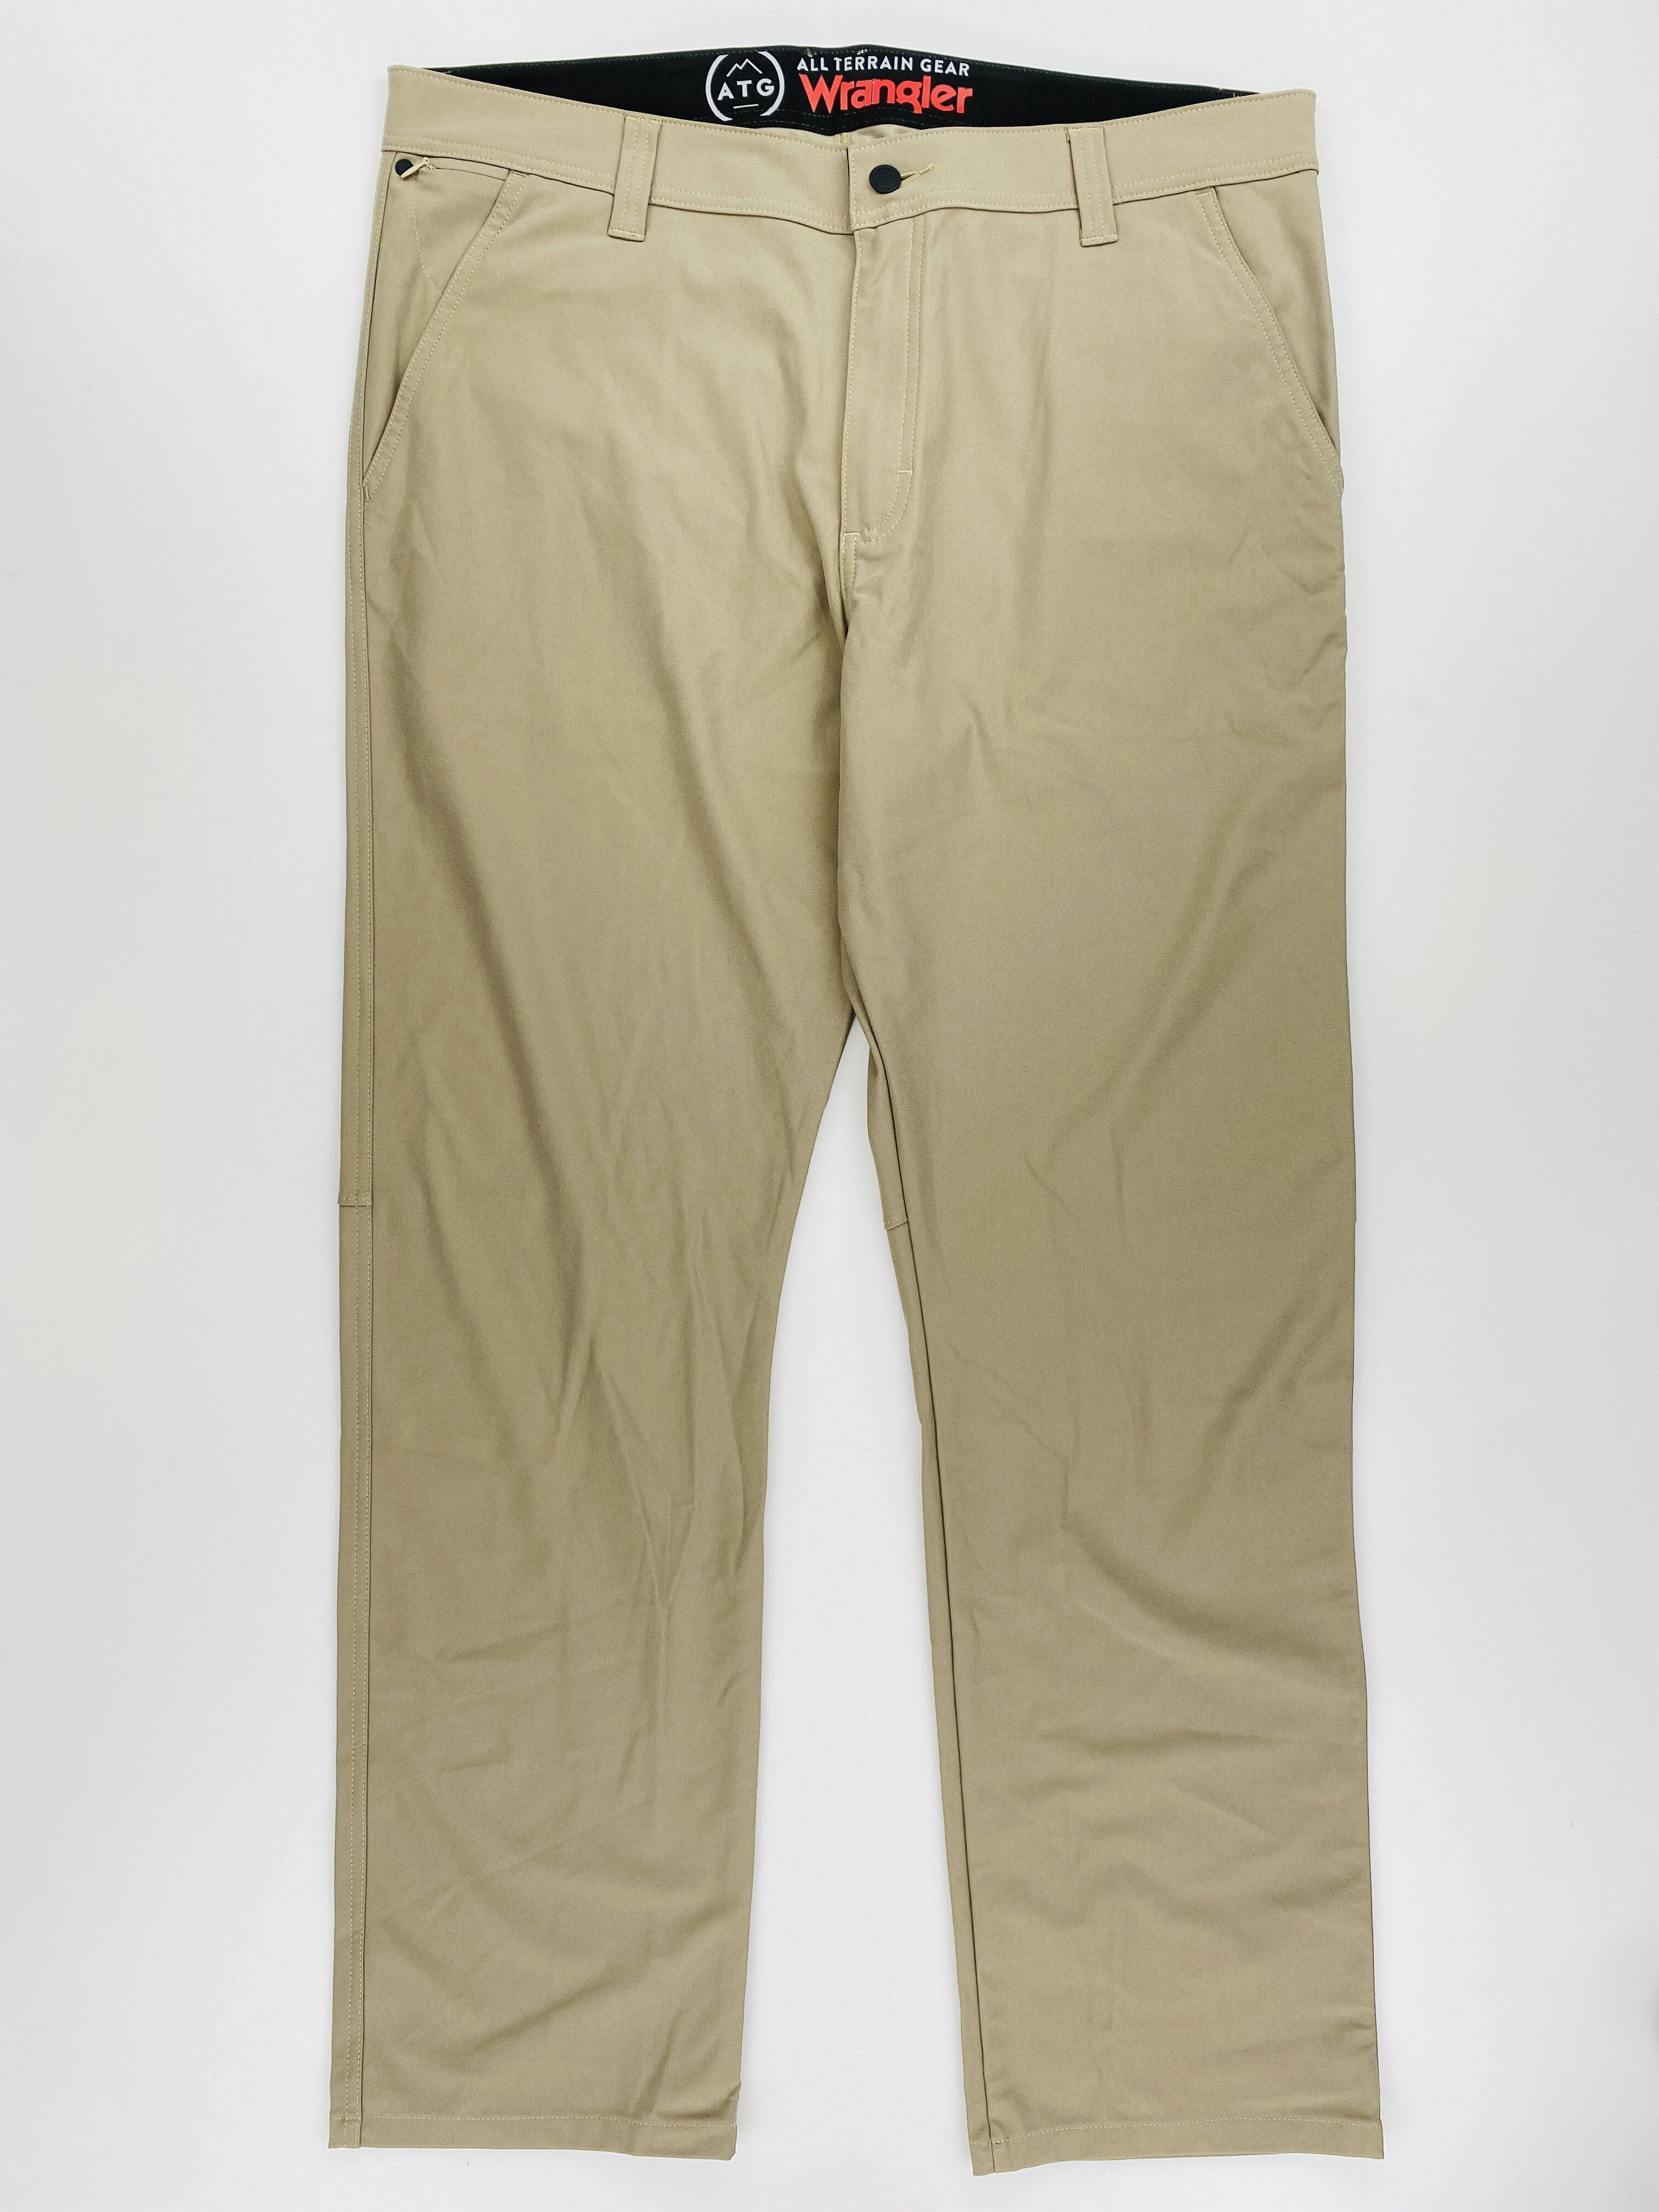 Wrangler Fwds Chino Pant - Second Hand Walking trousers - Women's - Beige - US 38 | Hardloop